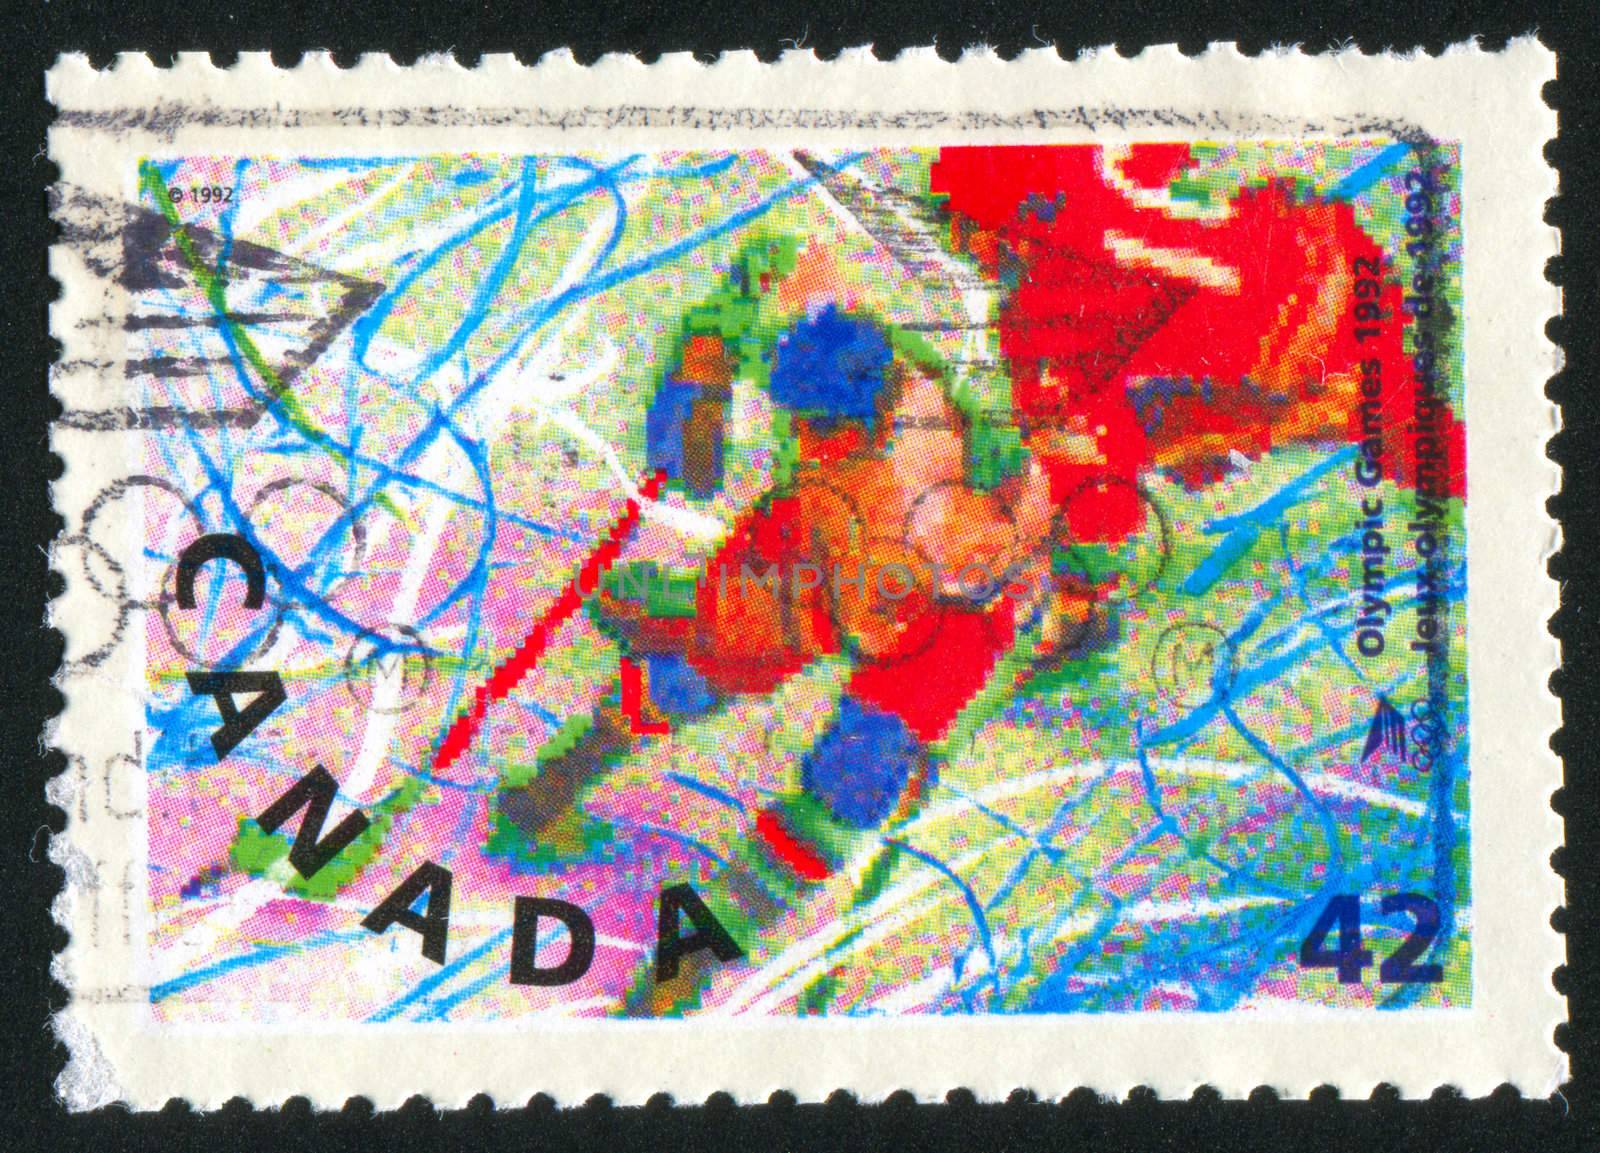 CANADA - CIRCA 1992: stamp printed by Canada, shows Hockey, circa 1992